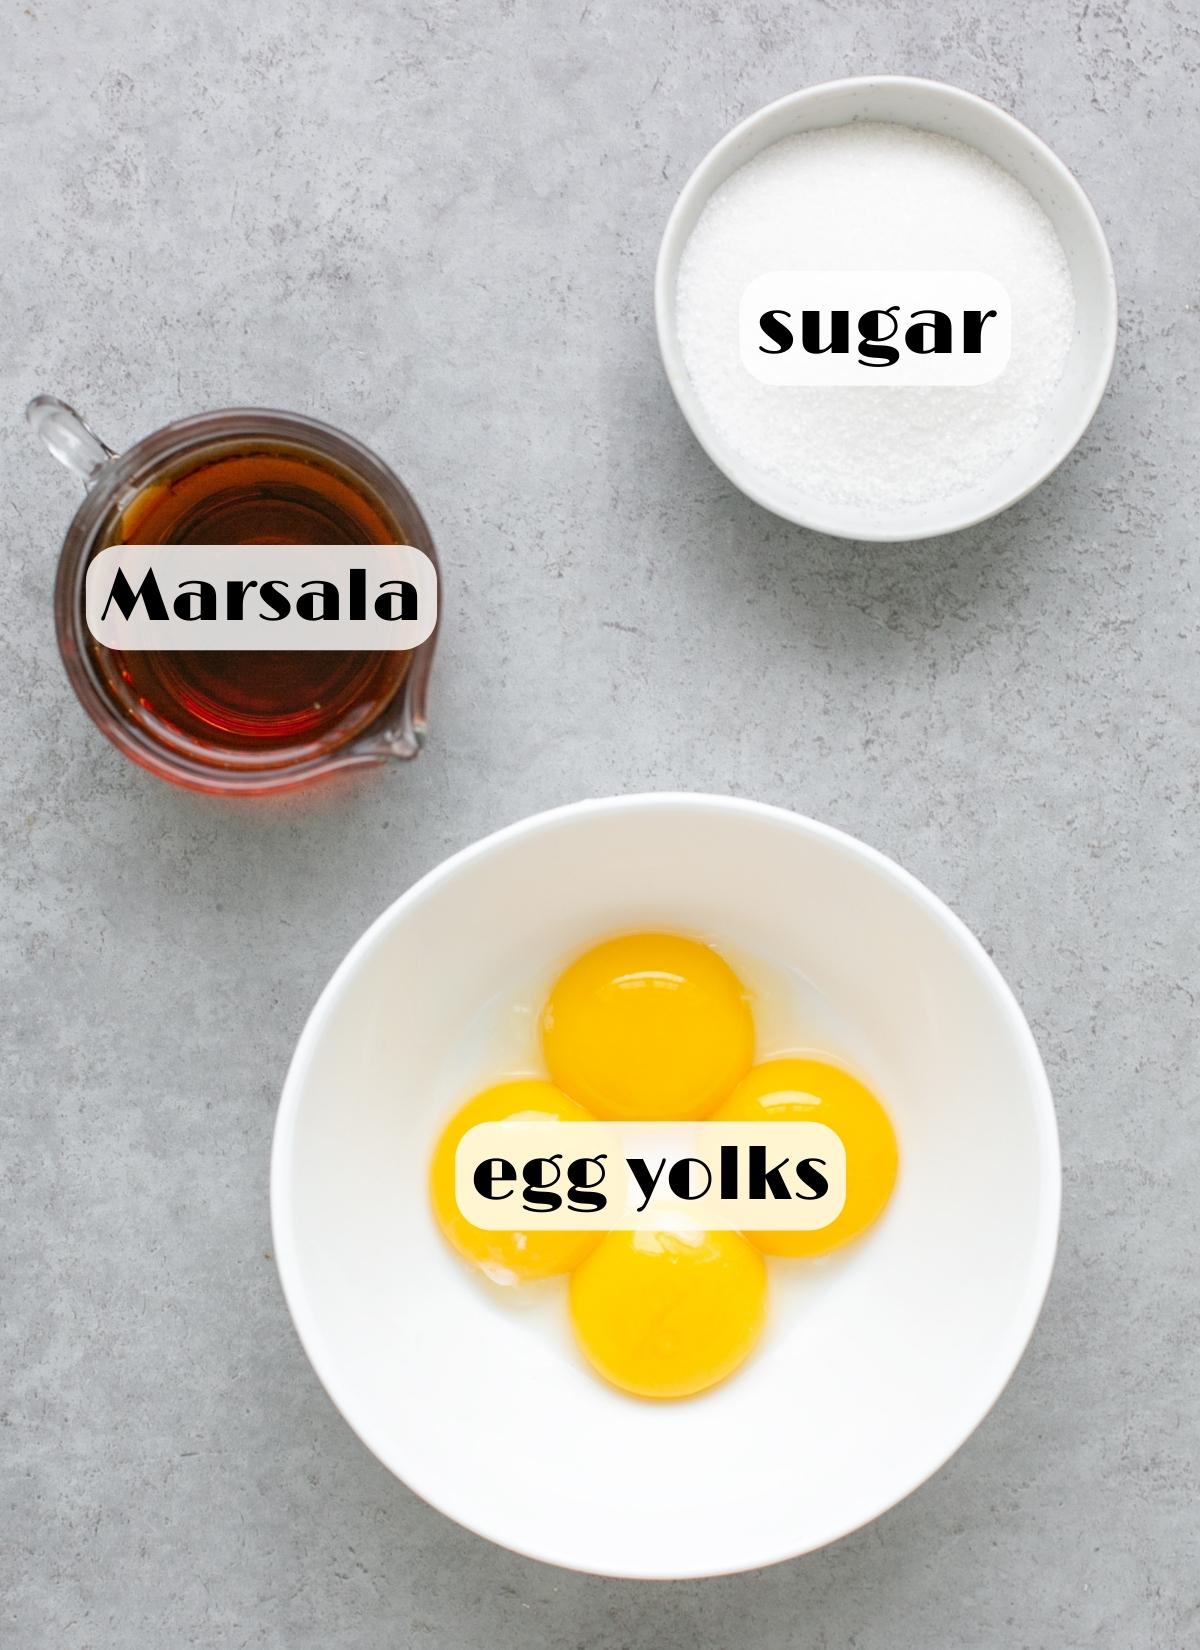 zabaglione ingredientes: gema de ovo, açúcar, vinho marsala.